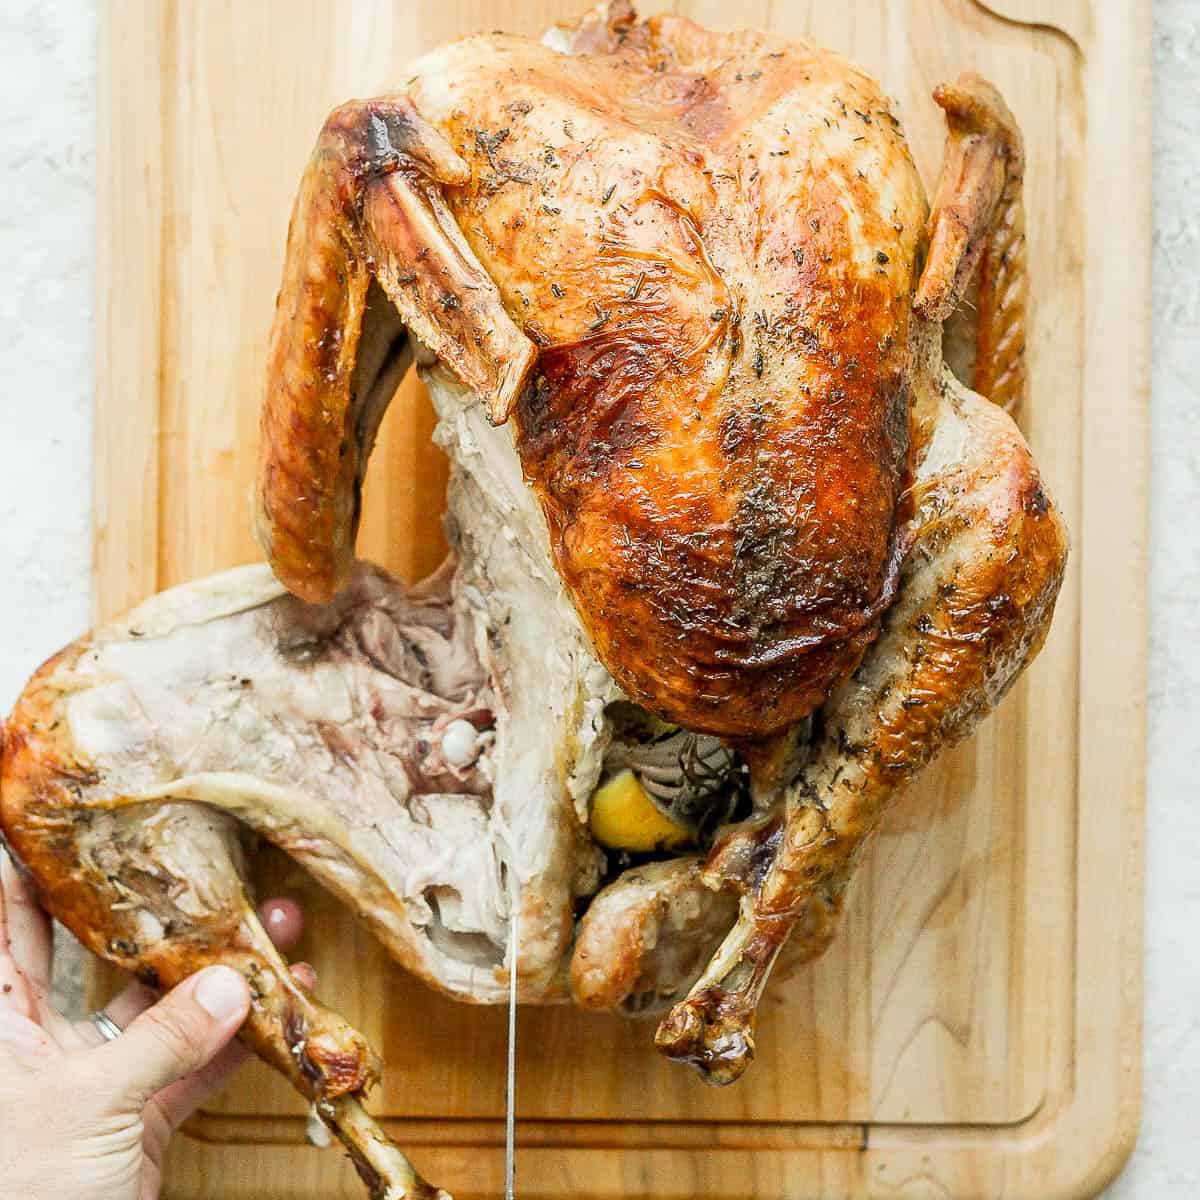 The leg of the turkey being cut off the turkey on a cutting board.